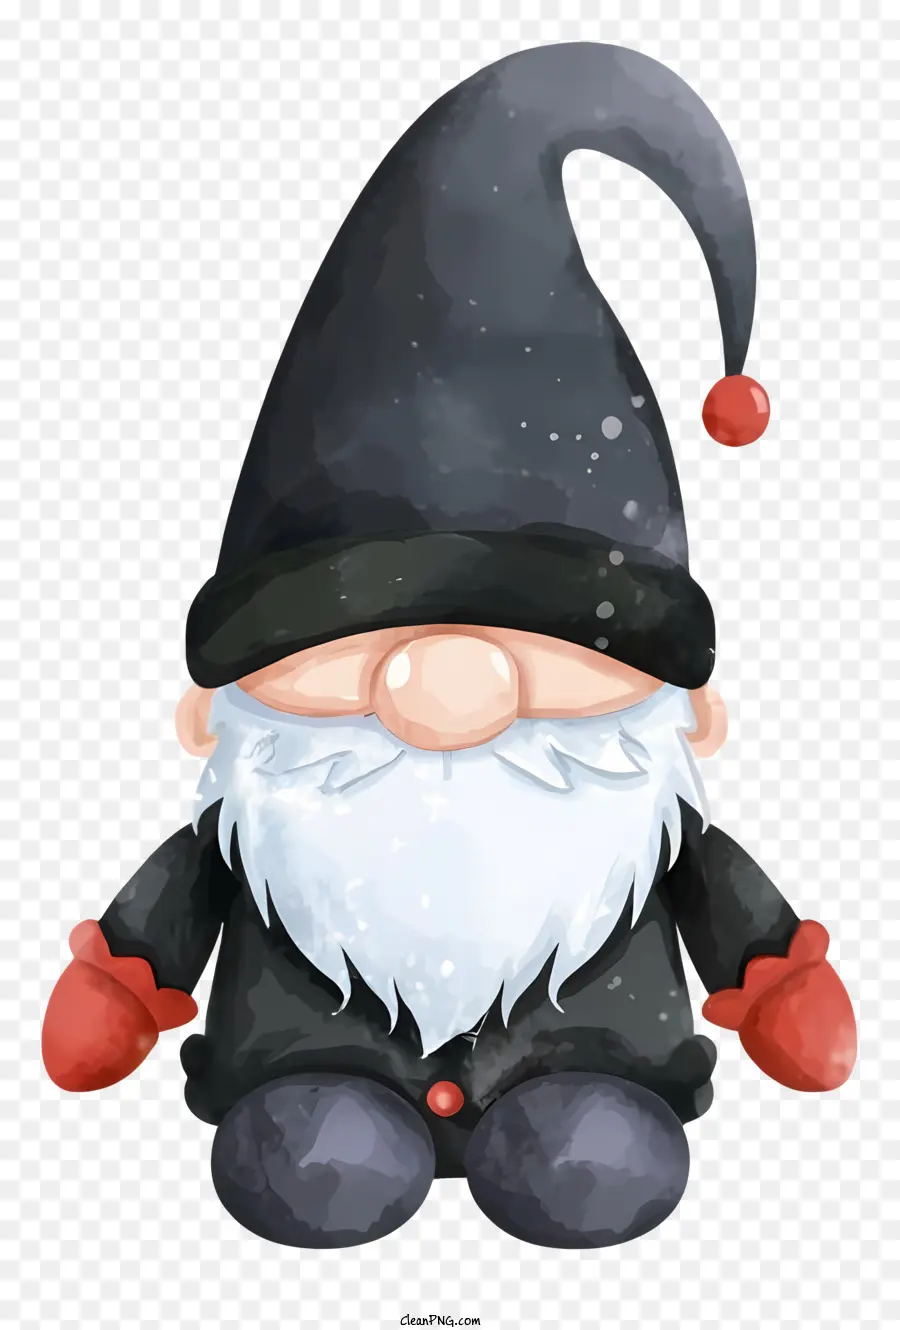 gnome black beard red hat red scarf black coat